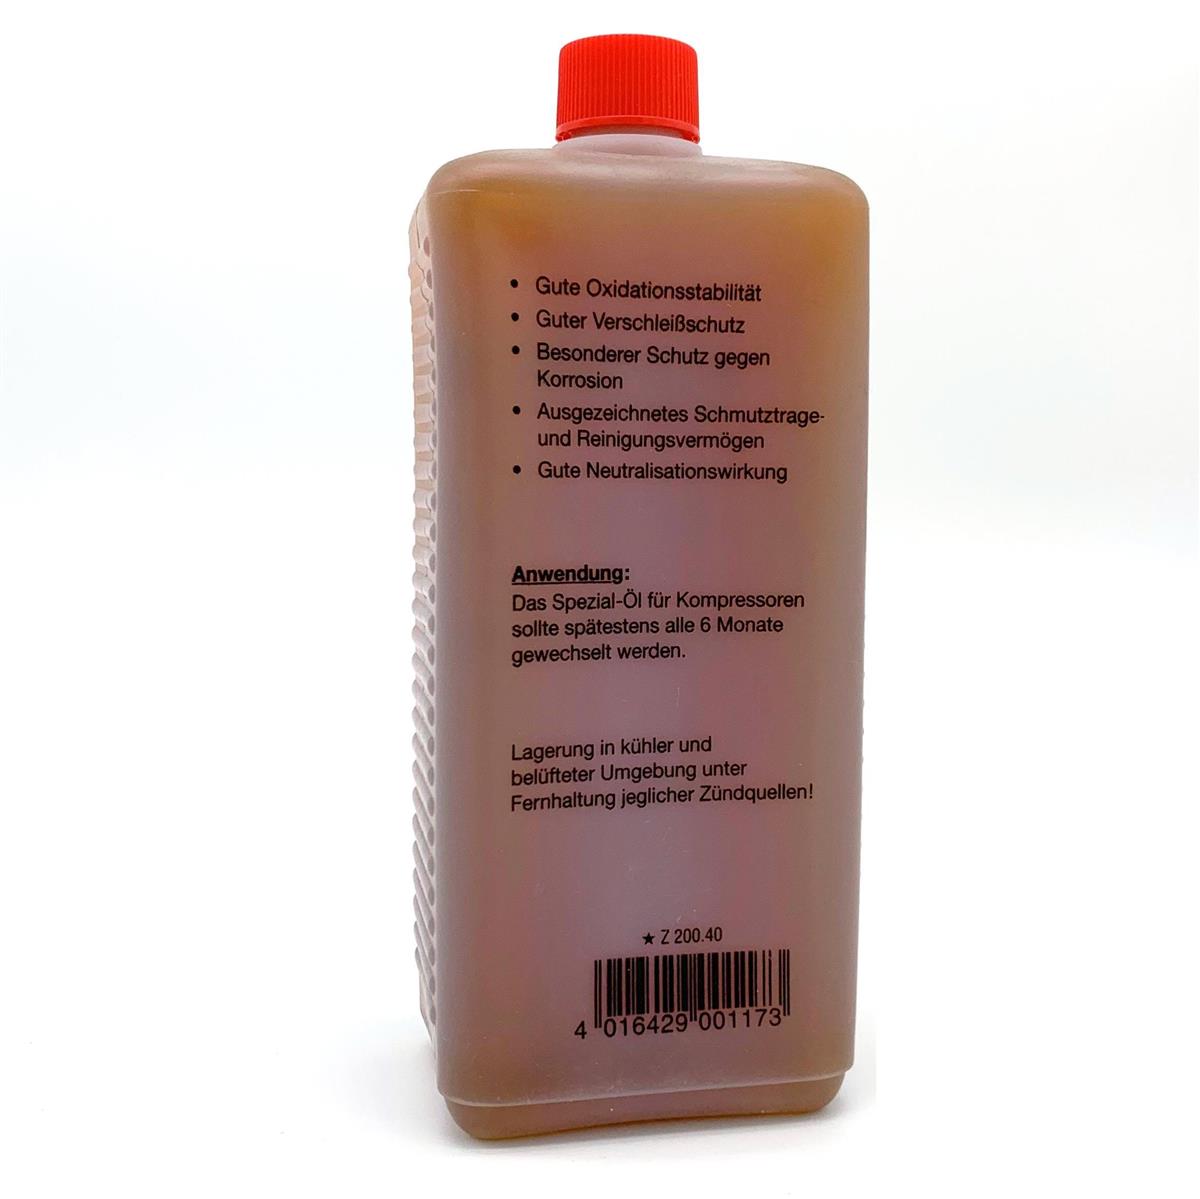 Prebena Spezialöl für Kompressoren 1 Liter